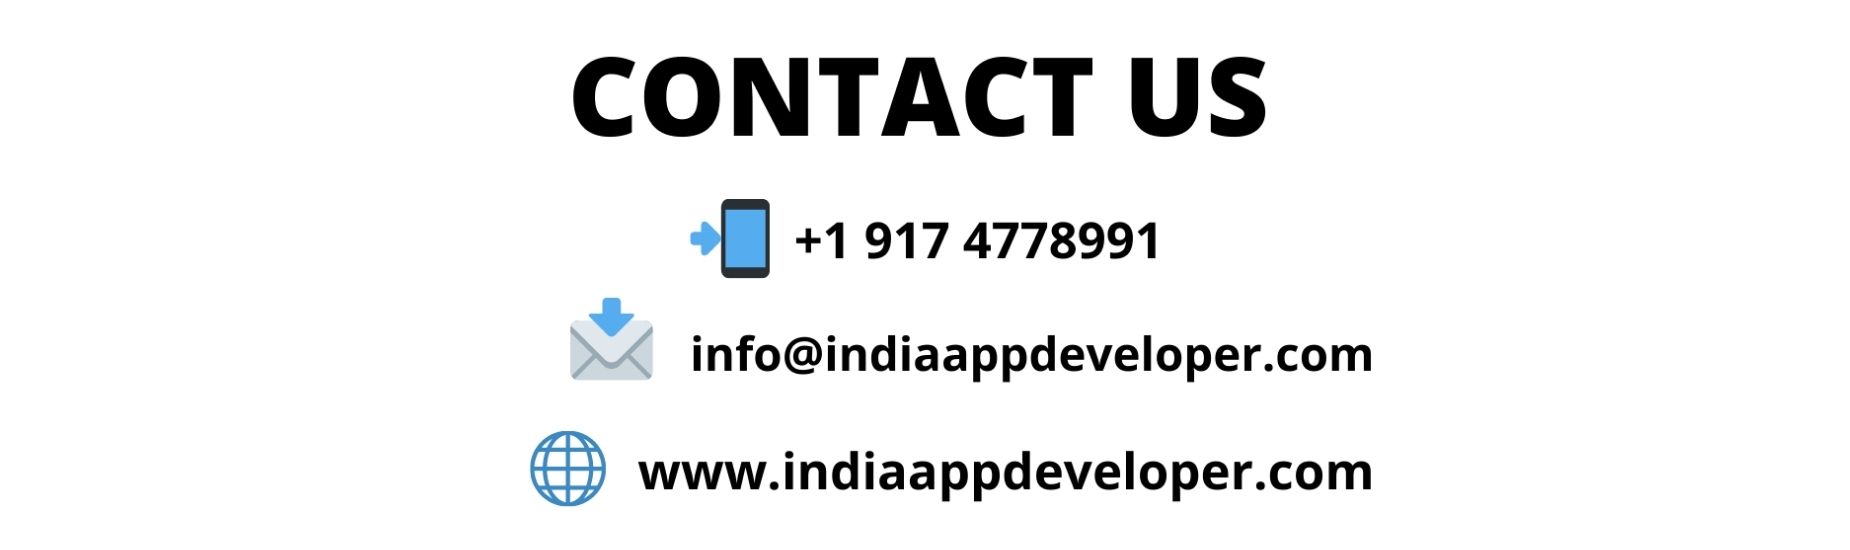 Dedicated iPhone App Developers Hire India | India App Developer